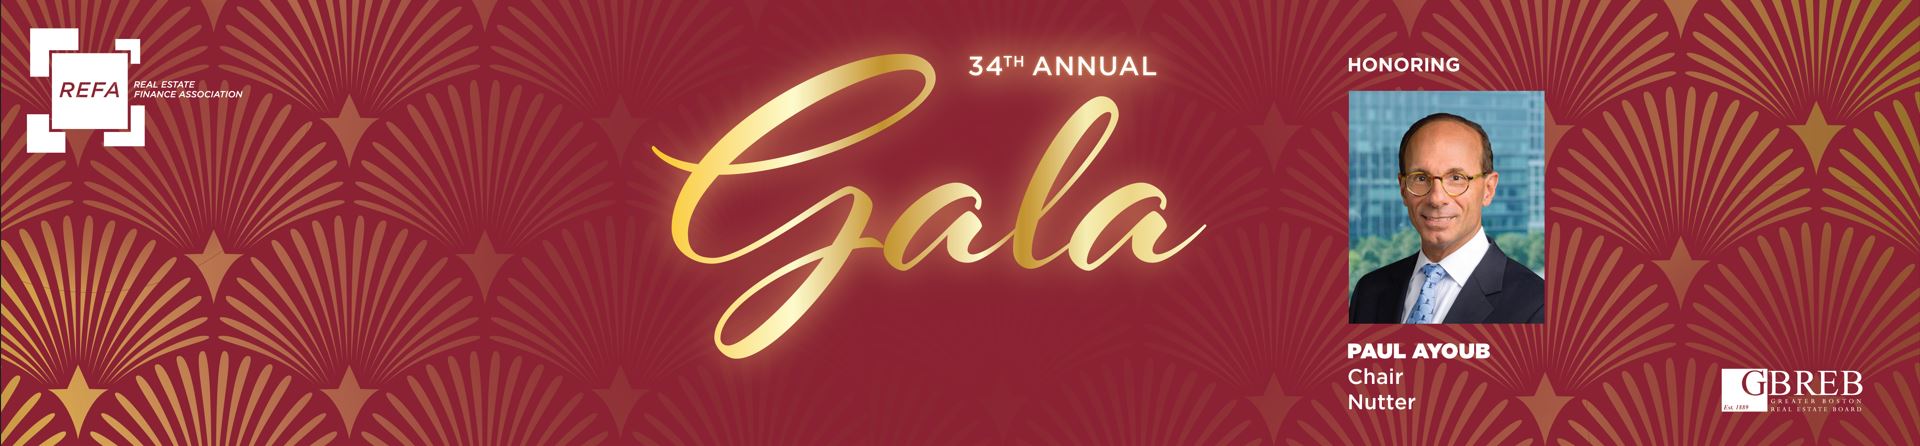 34th Annual REFA Gala honoring Paul Ayoub, Nutter